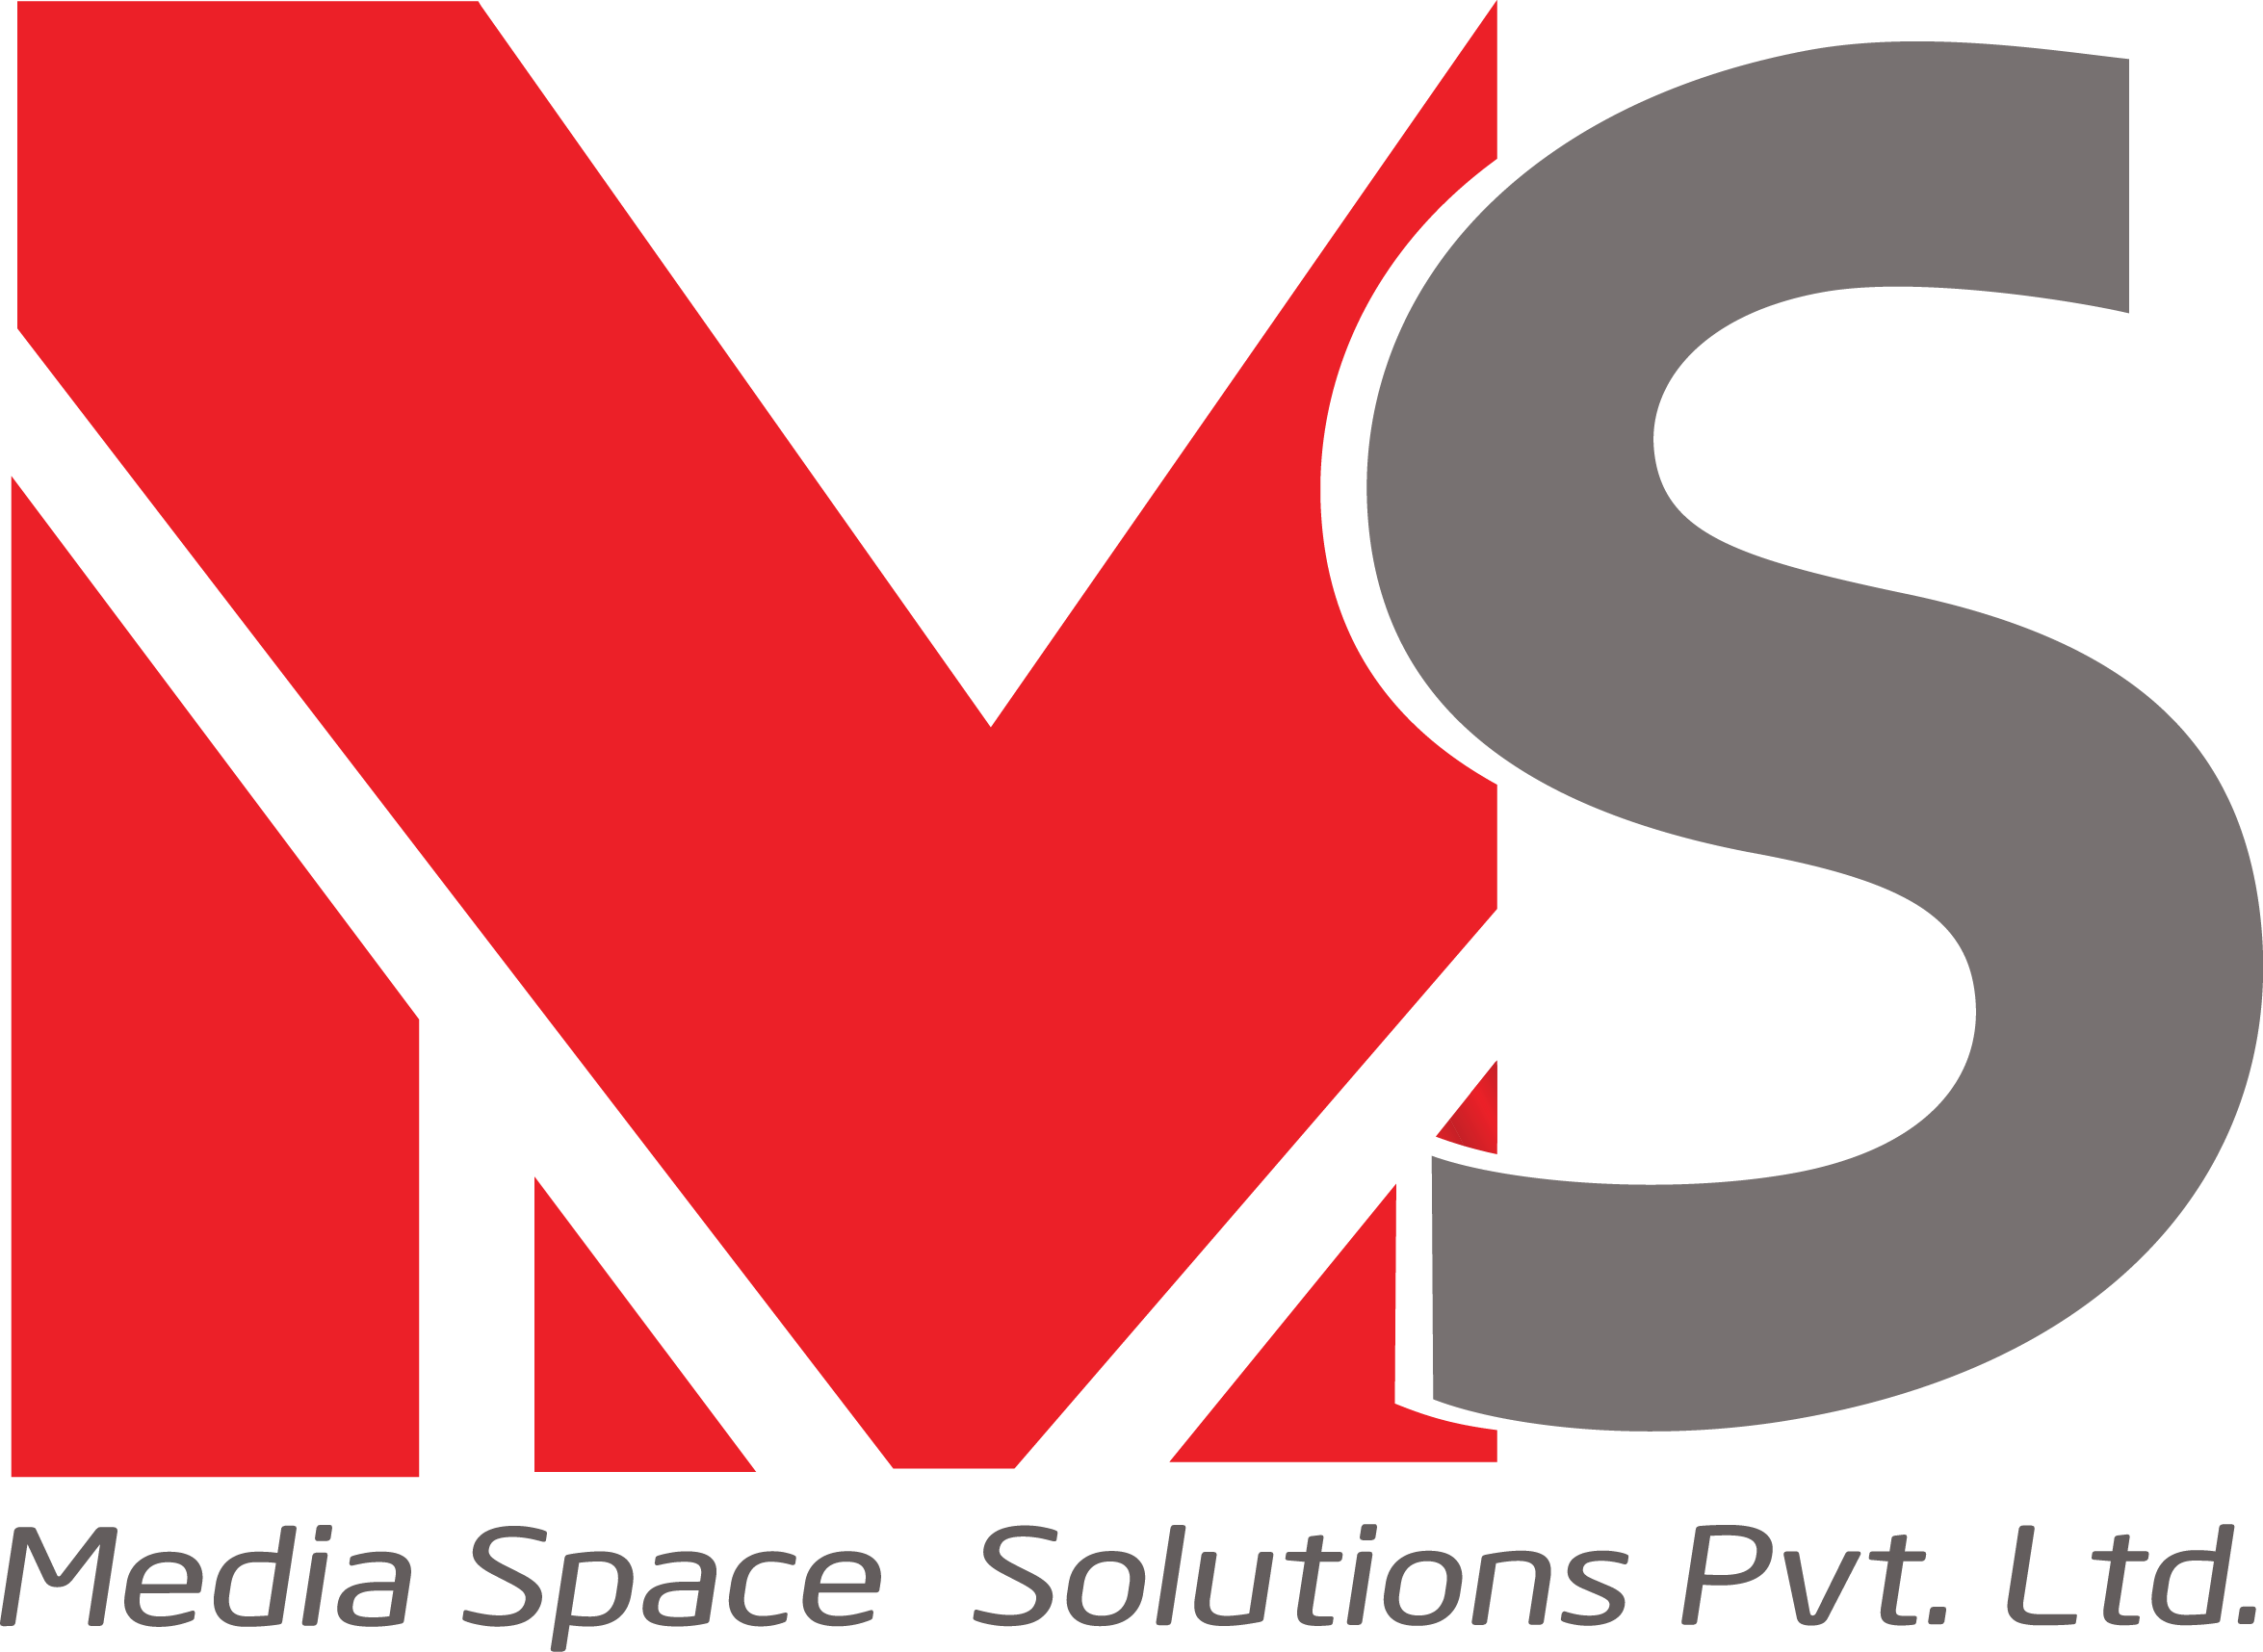 Media Space Solutions Pvt. Ltd